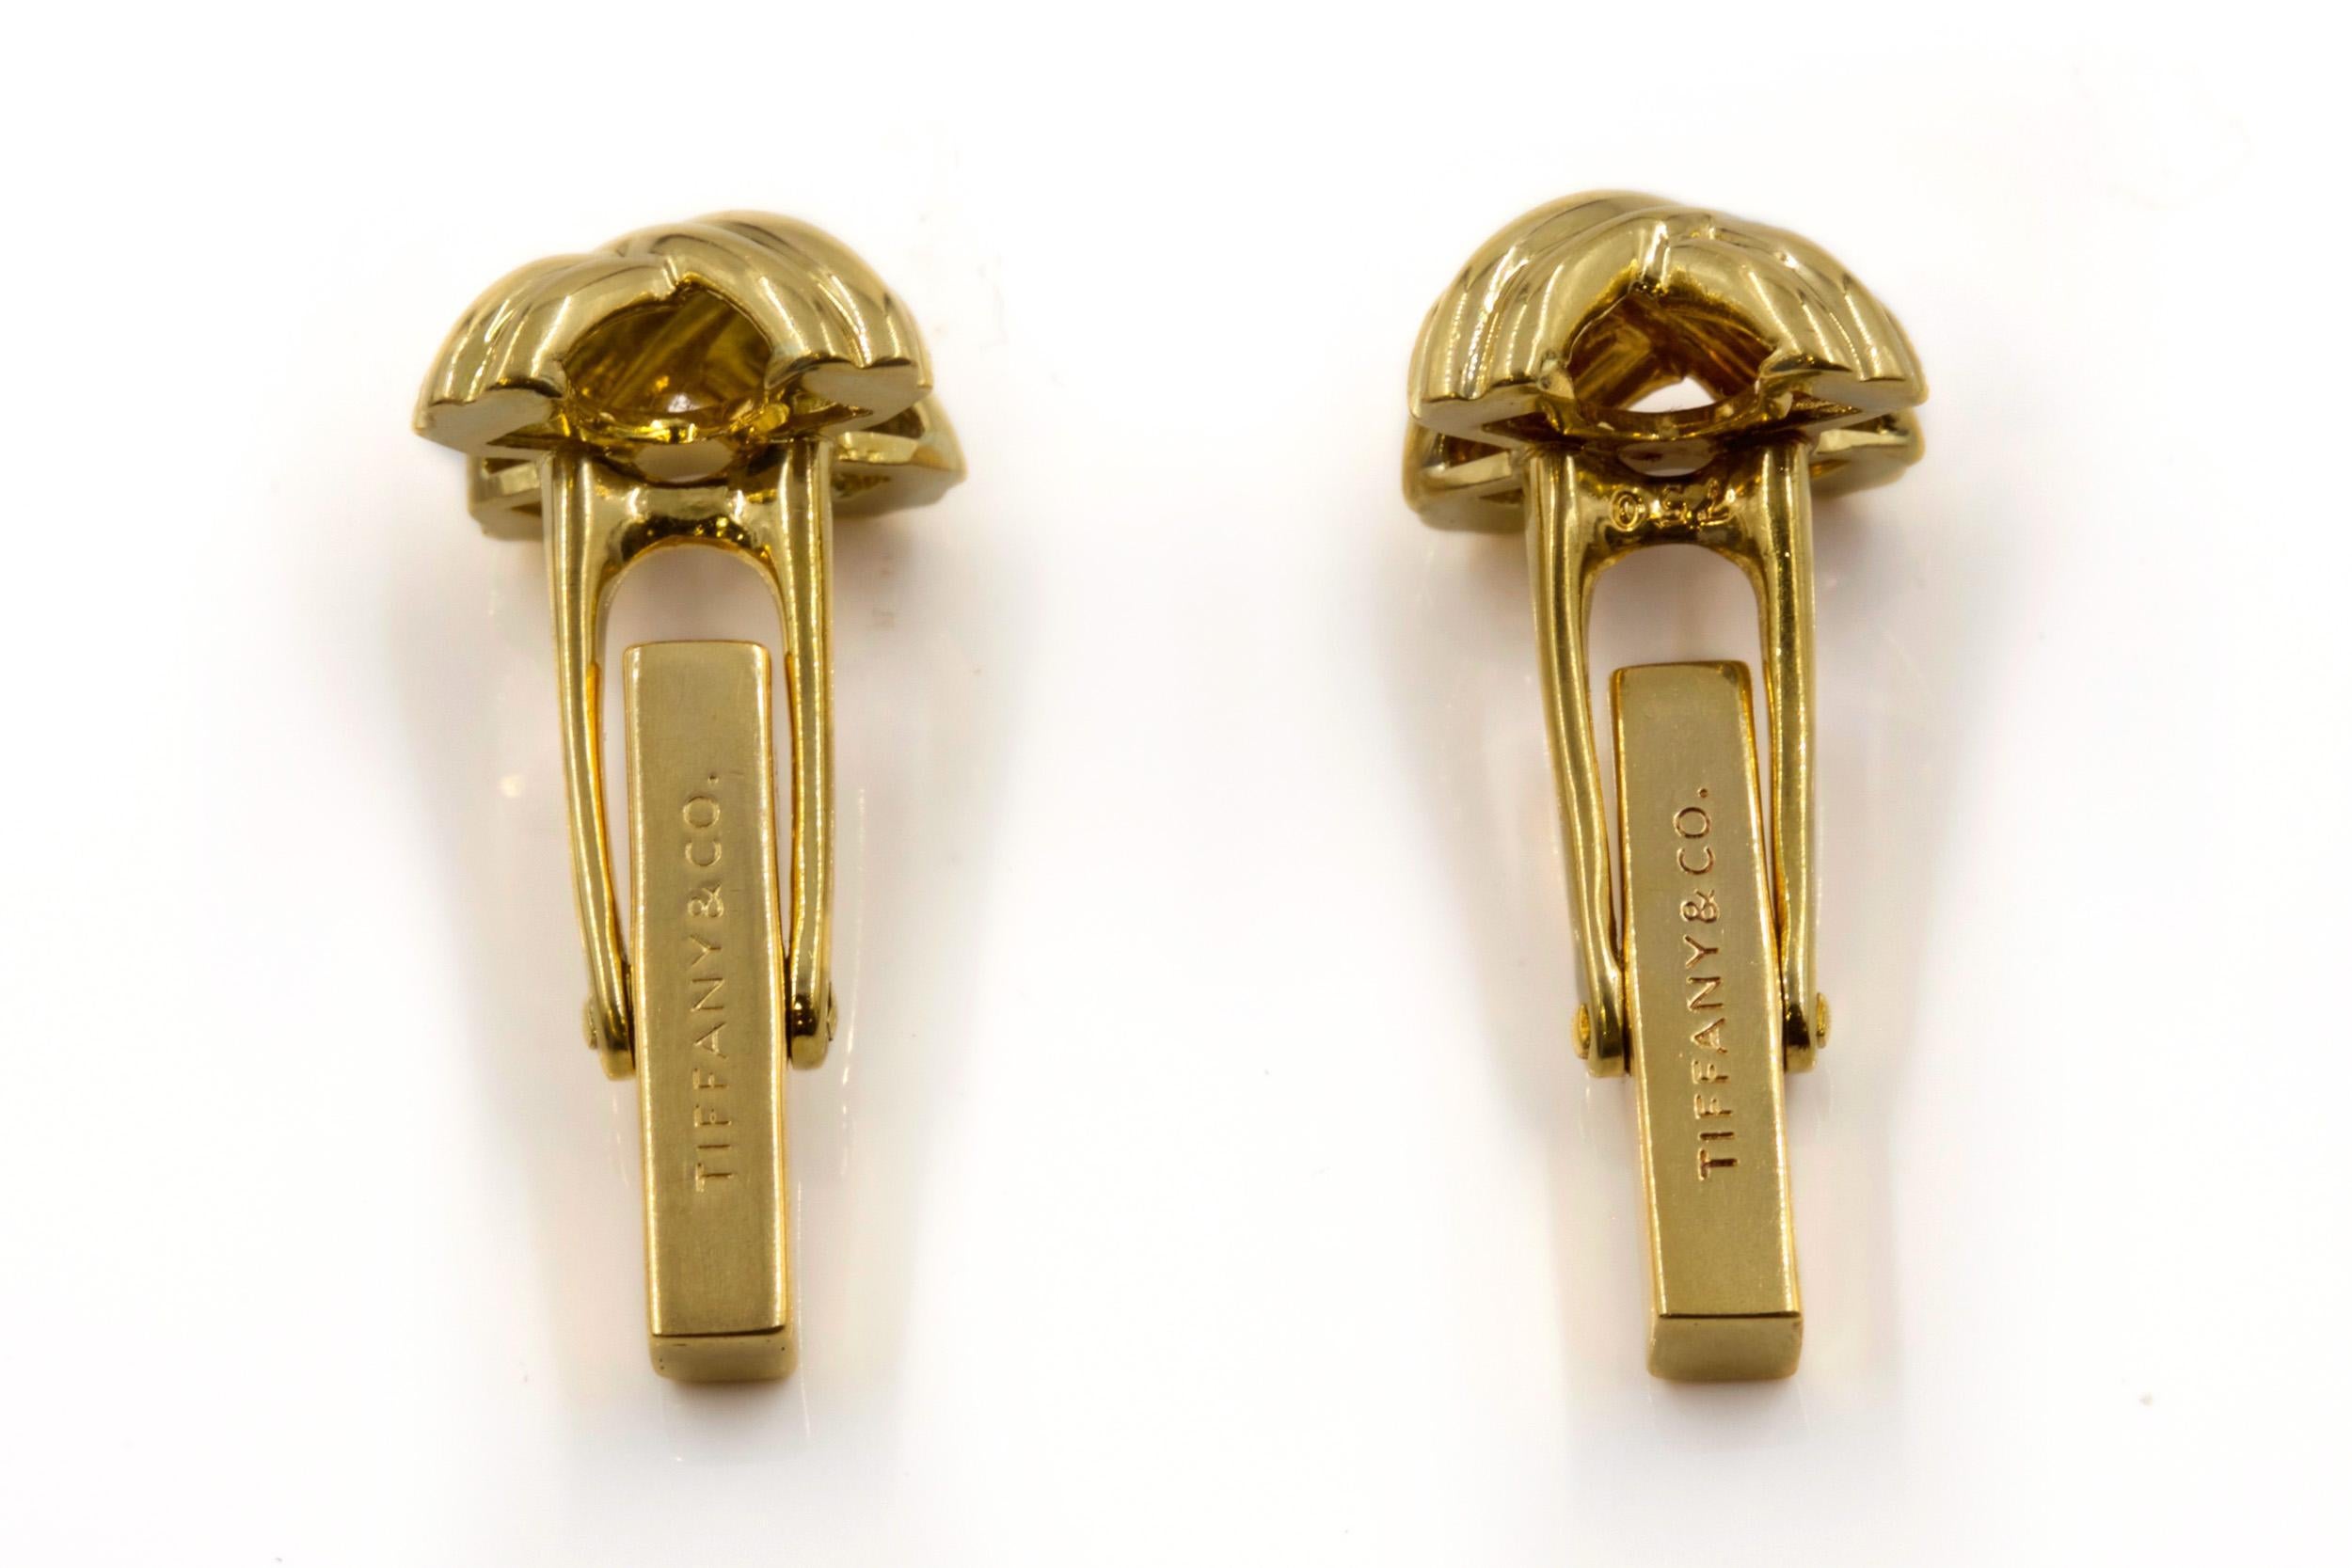 American Tiffany & Co. 18k Gold “Signature X” Cufflinks, a Pair